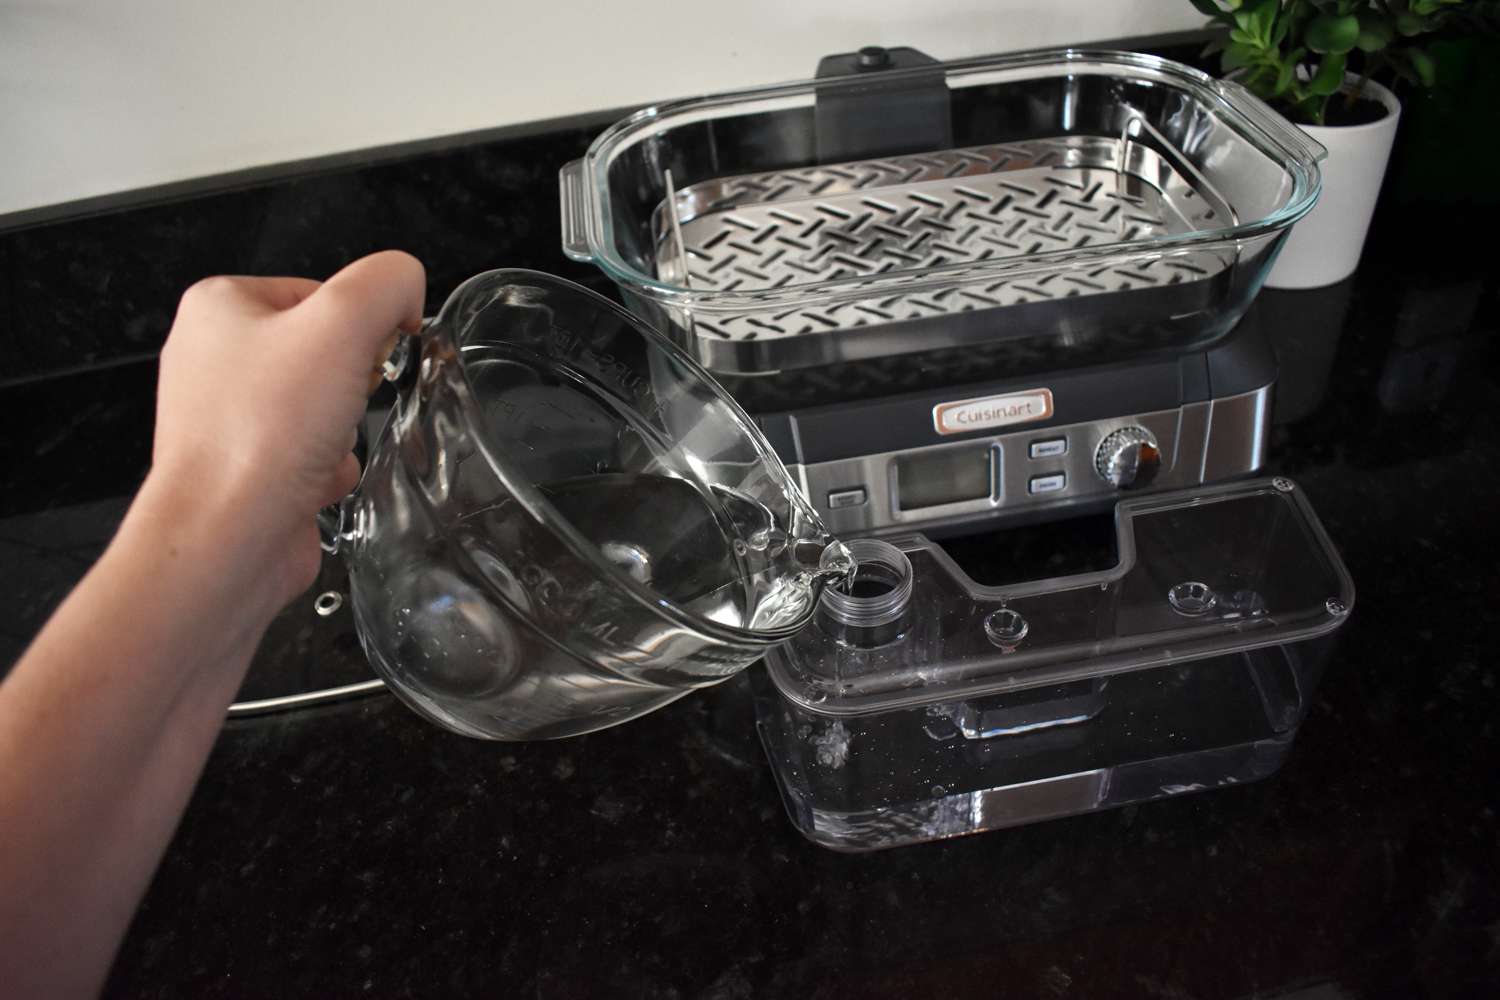 Cuisinart CookFresh Digital Glass Steamer STM-1000